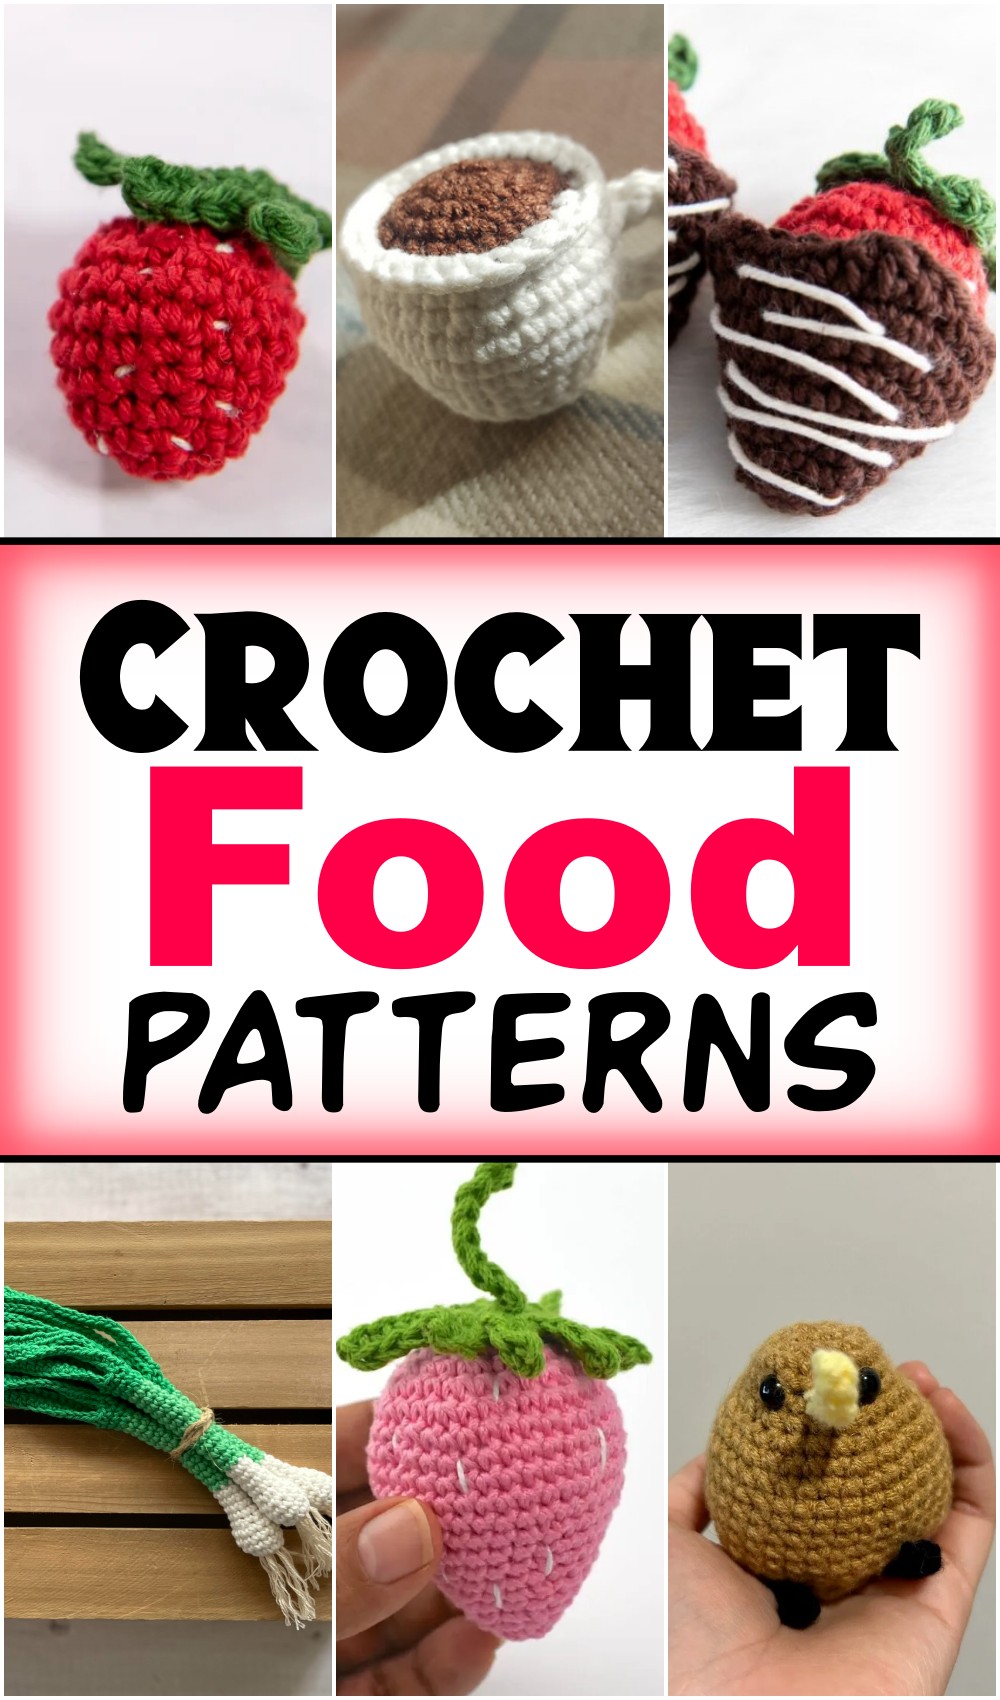 7 Easy Crochet Food Patterns For Play Kitchen Amigurumi 